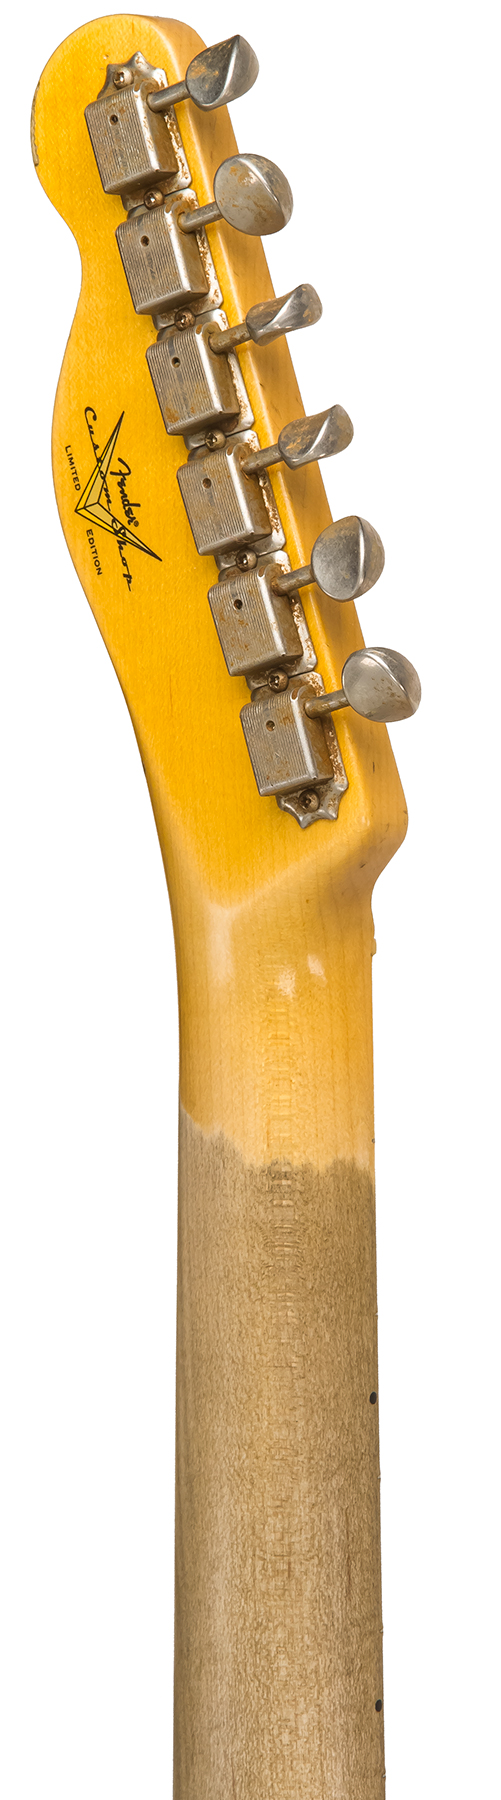 Fender Custom Shop Tele Custom 1963 2020 Ltd Rw #cz545983 - Relic Chartreuse Sparkle - E-Gitarre in Teleform - Variation 5